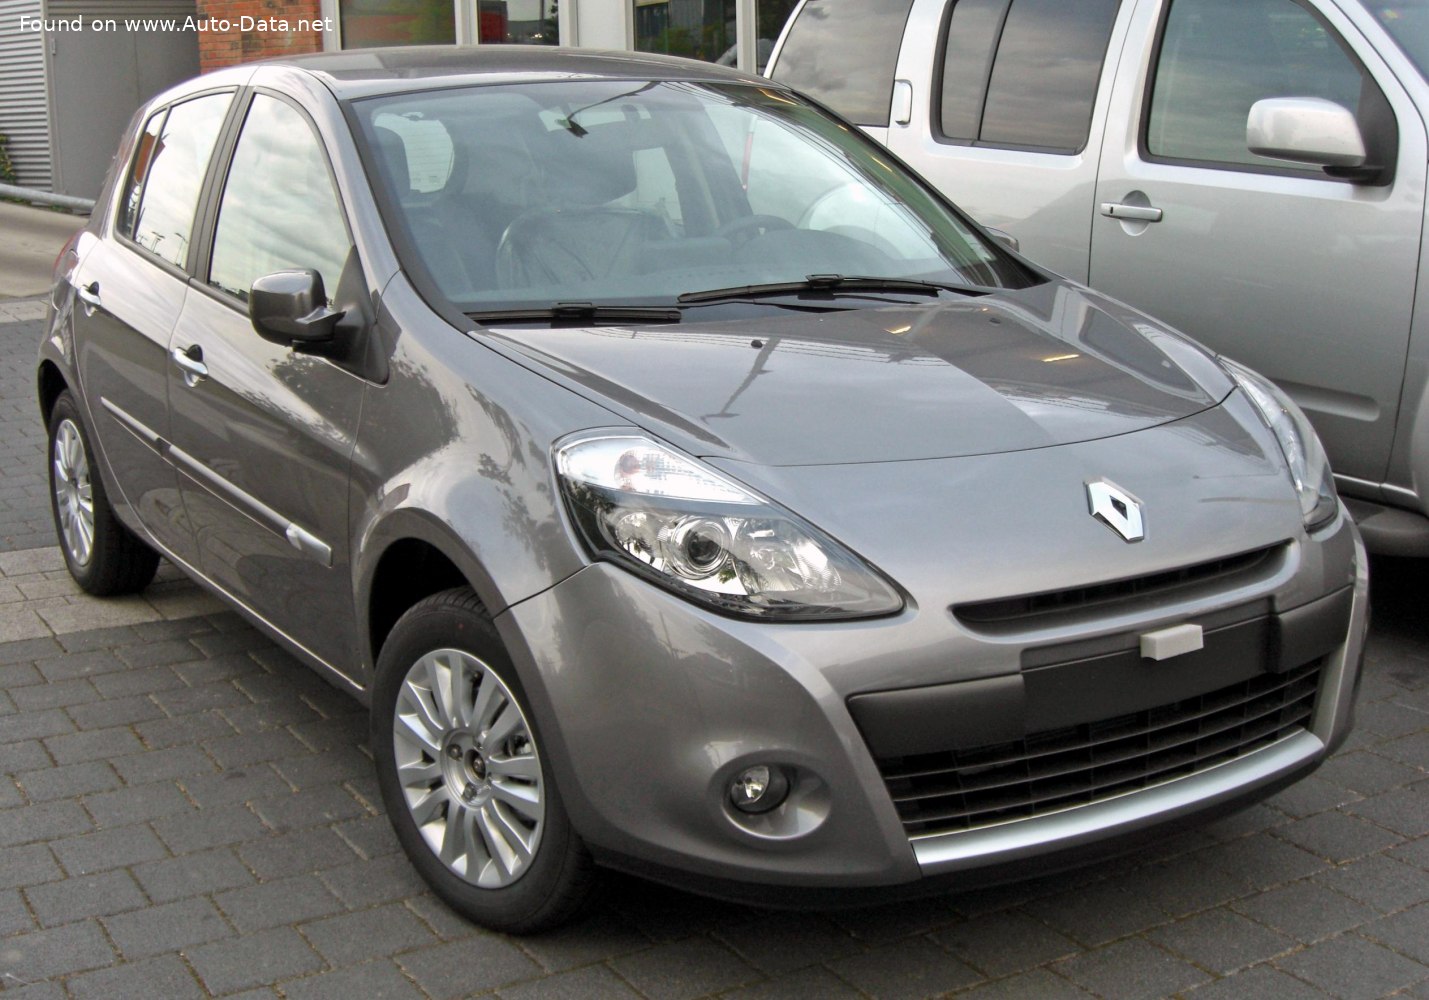 https://www.auto-data.net/images/f83/Renault-Clio-III-facelift-2009.jpg